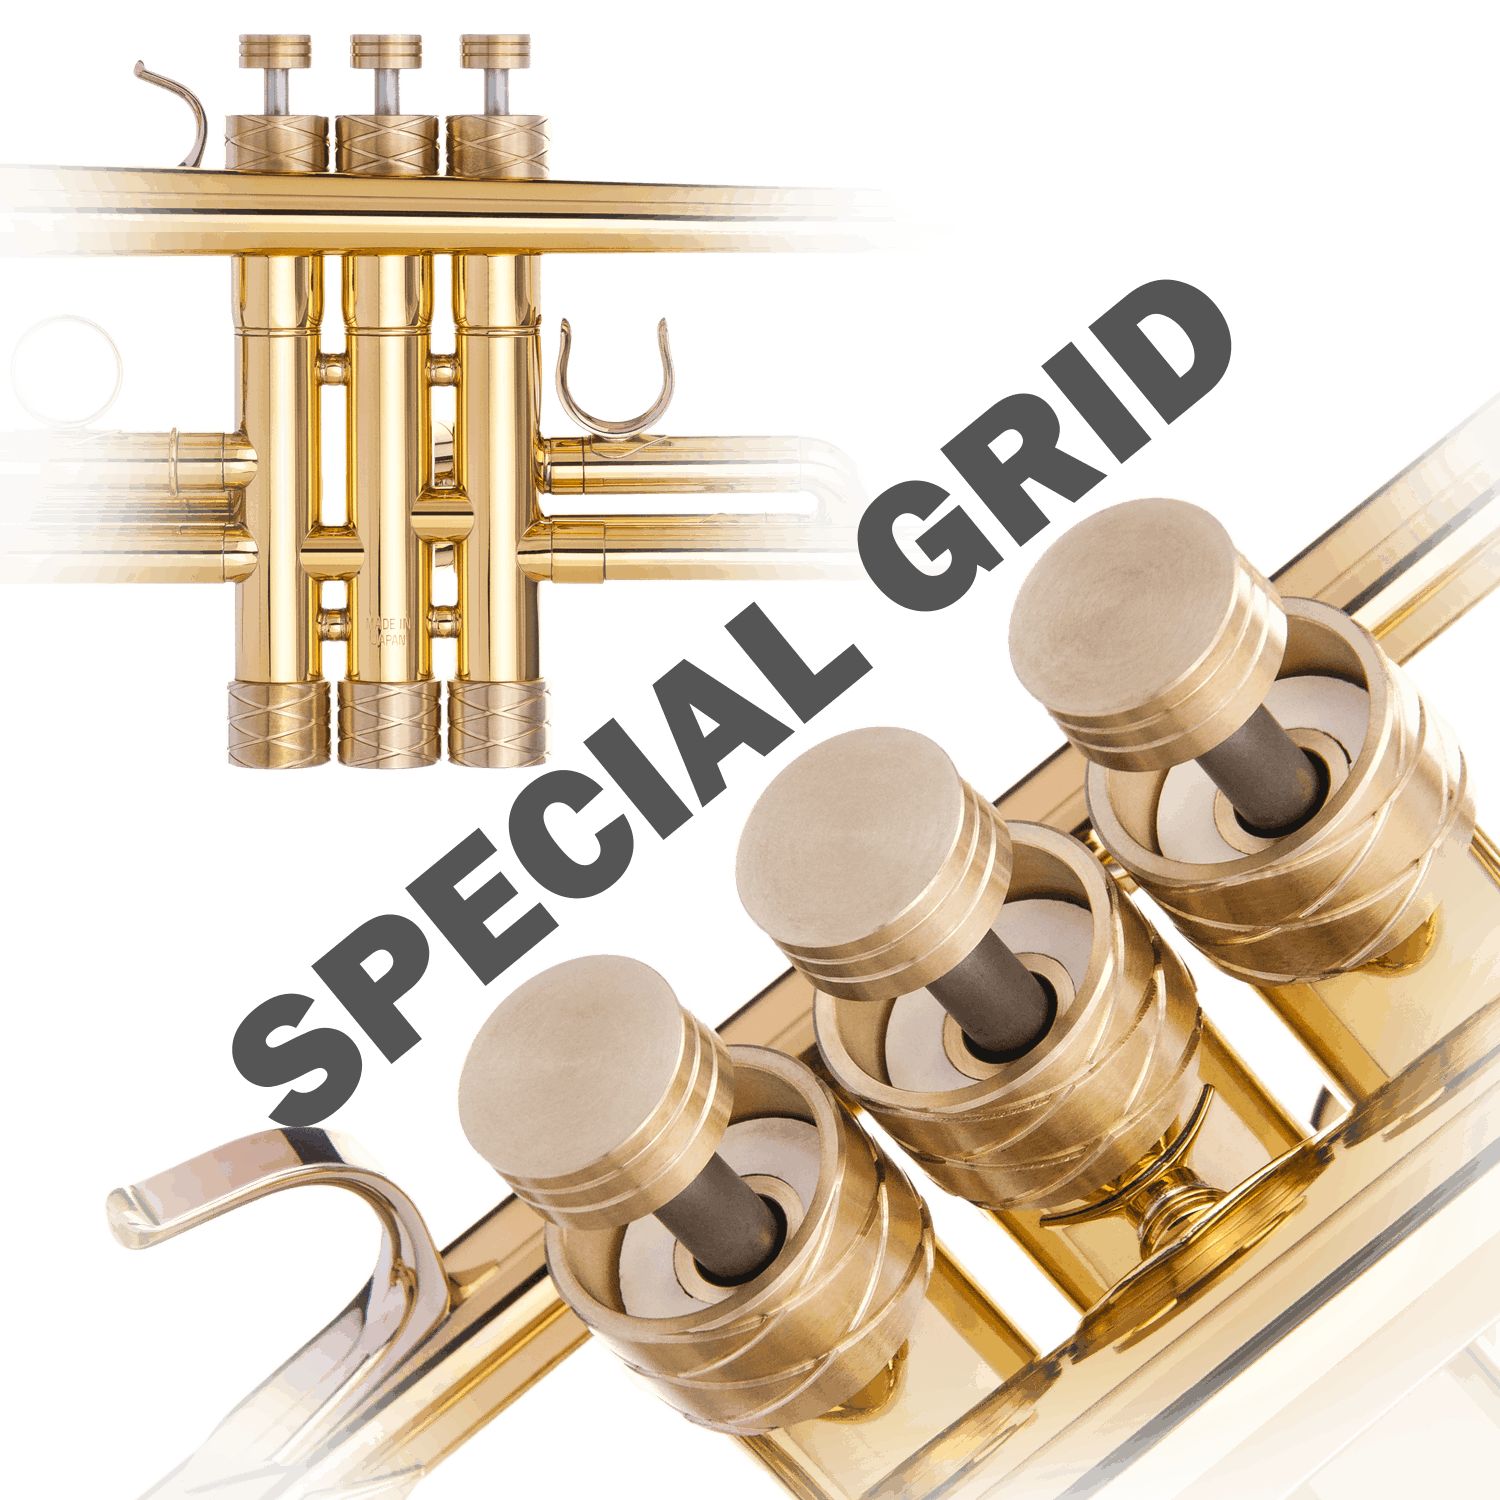 KGUmusic Trumpet accessories. Trumpet Trim Kit & Parts